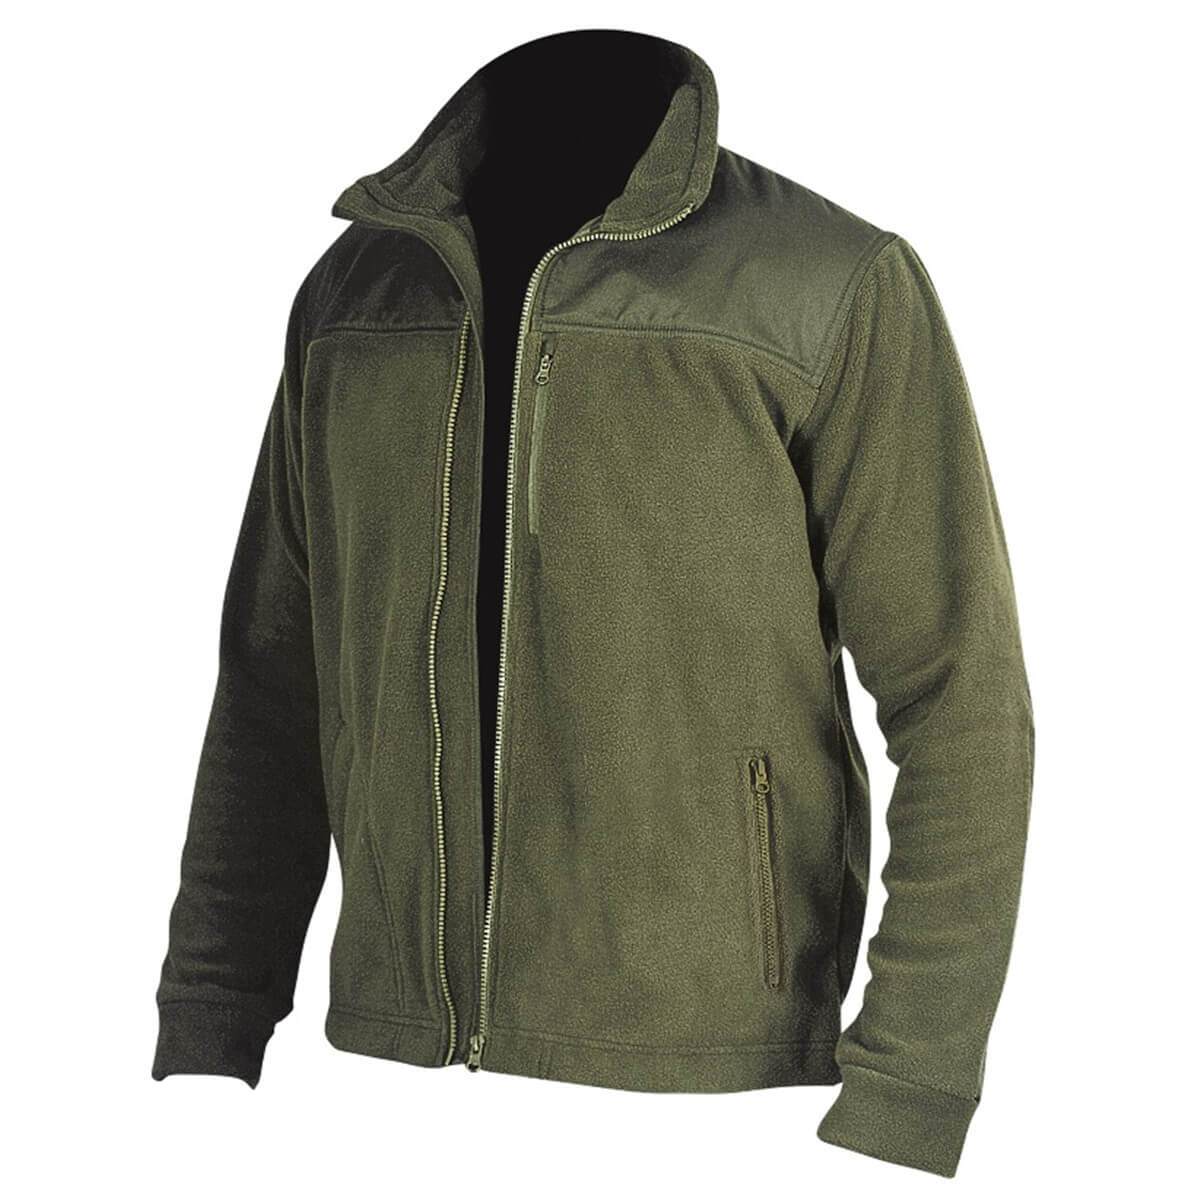 Fleece mikina s vložkami,280 g/m2, vel. S,barva zelená army DEDRA BH6PA-S